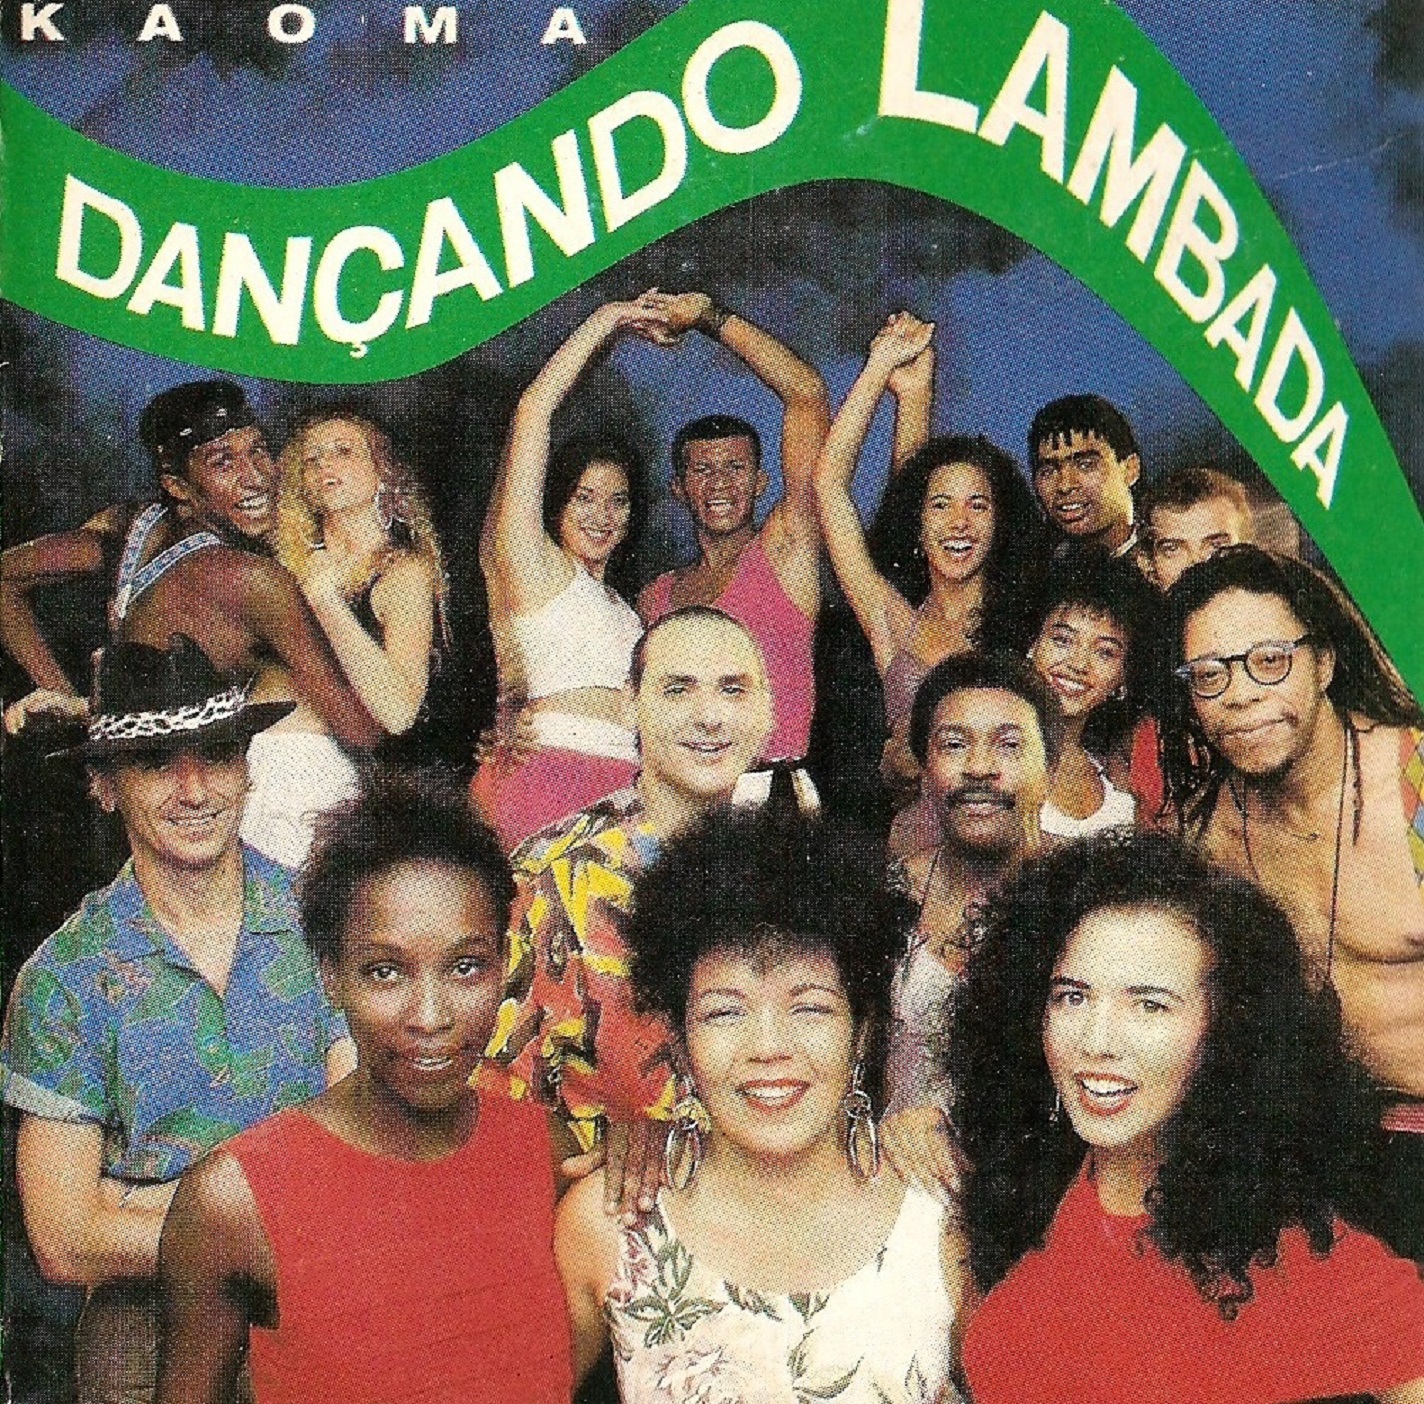 Kaoma - Dancando Lambada (CDM) FLAC - 1989